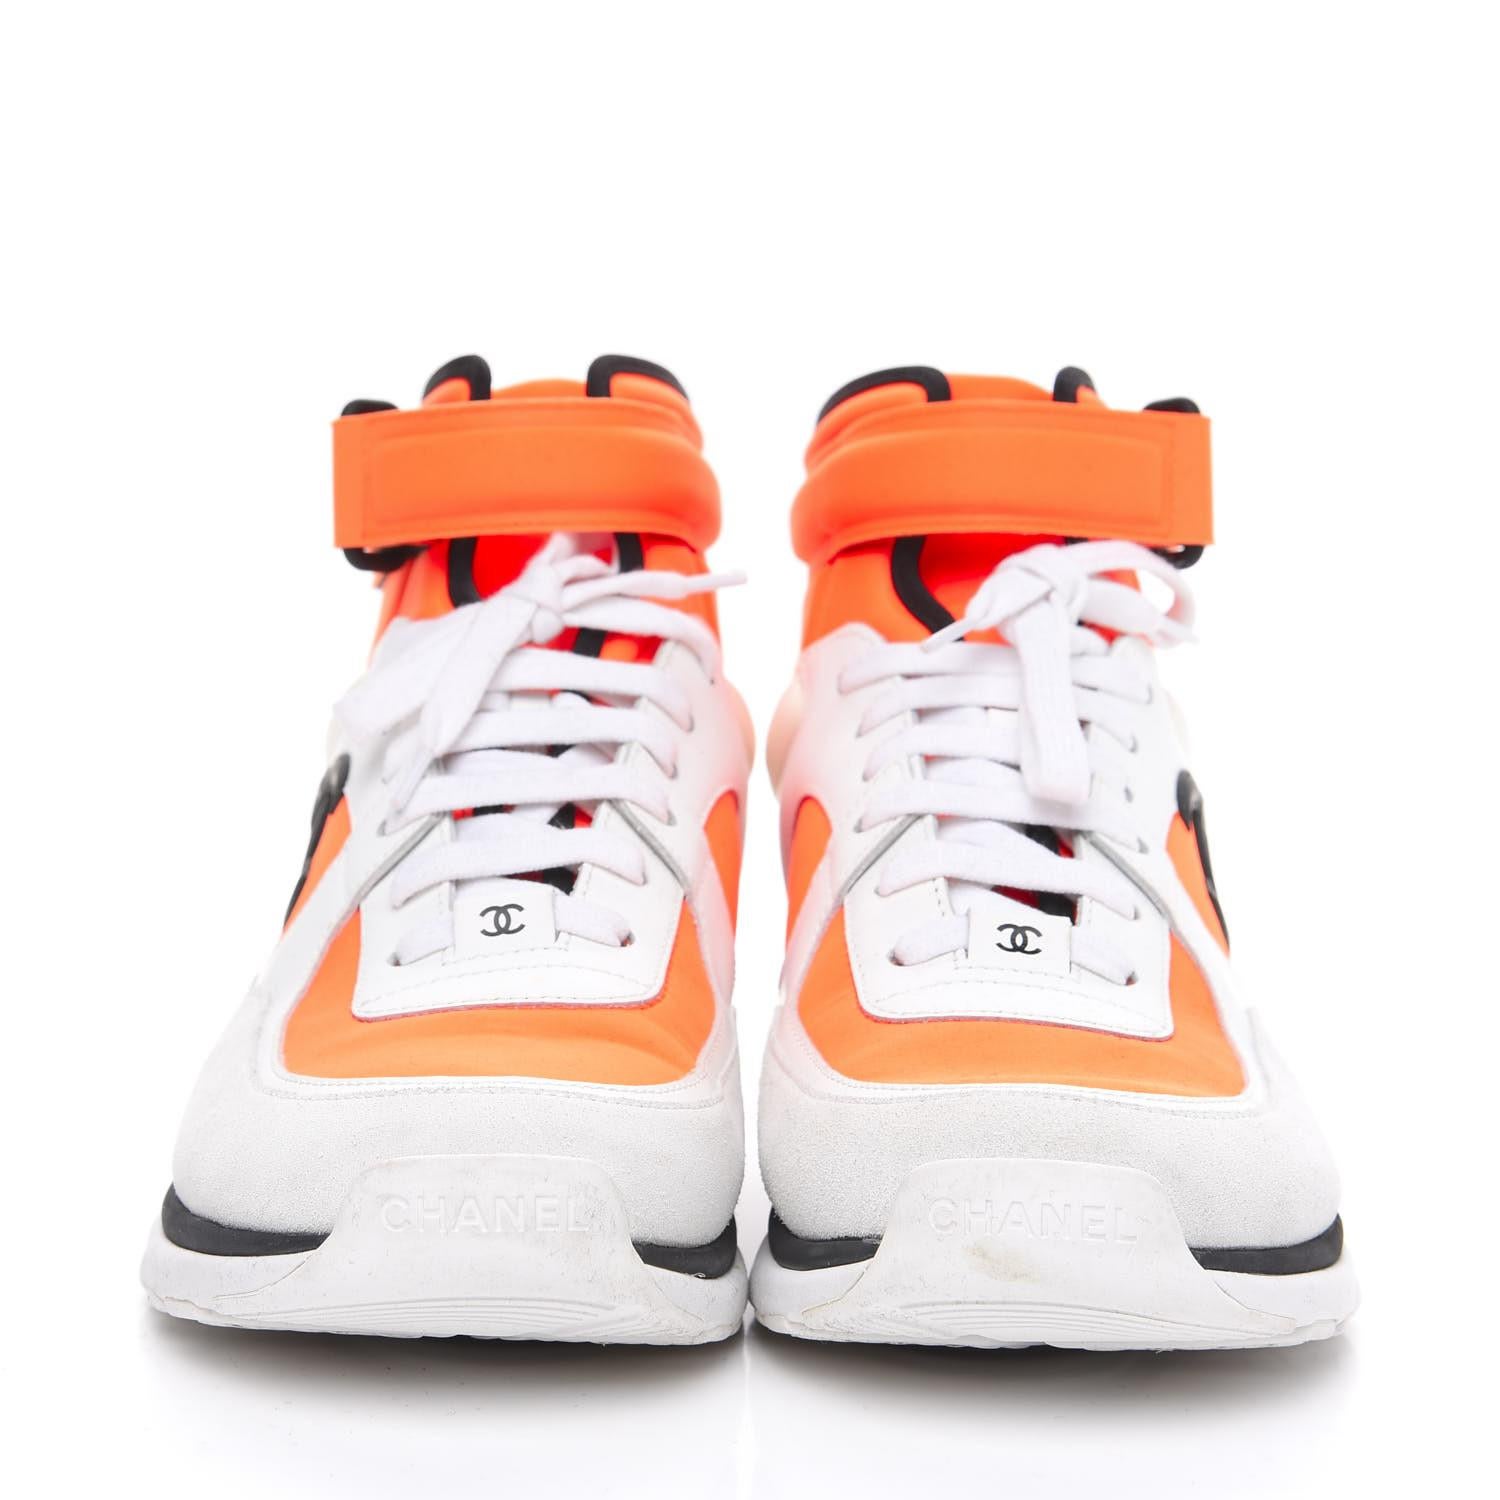 Wildleder Kalbsleder Lammfell Neopren High Top CC Sneakers 40 Weiß Fluo Orange Damen im Angebot